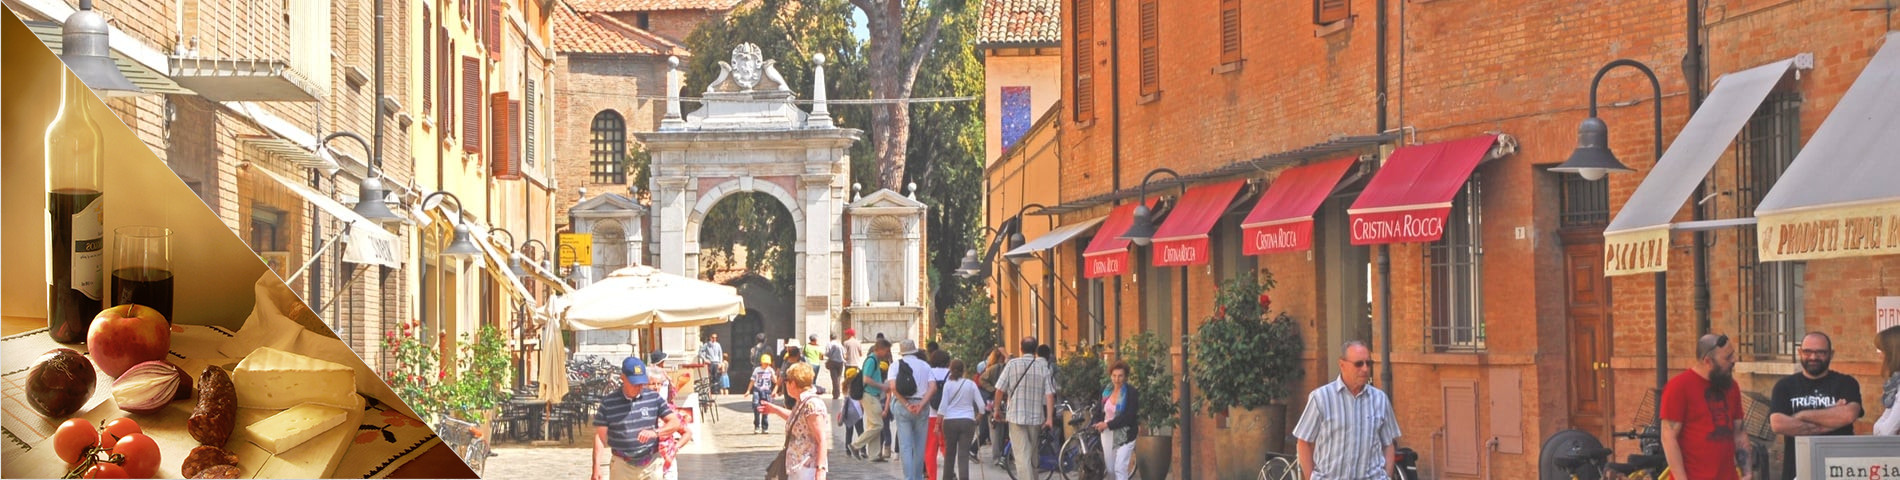 Ravenna - Italiaans & cultuur